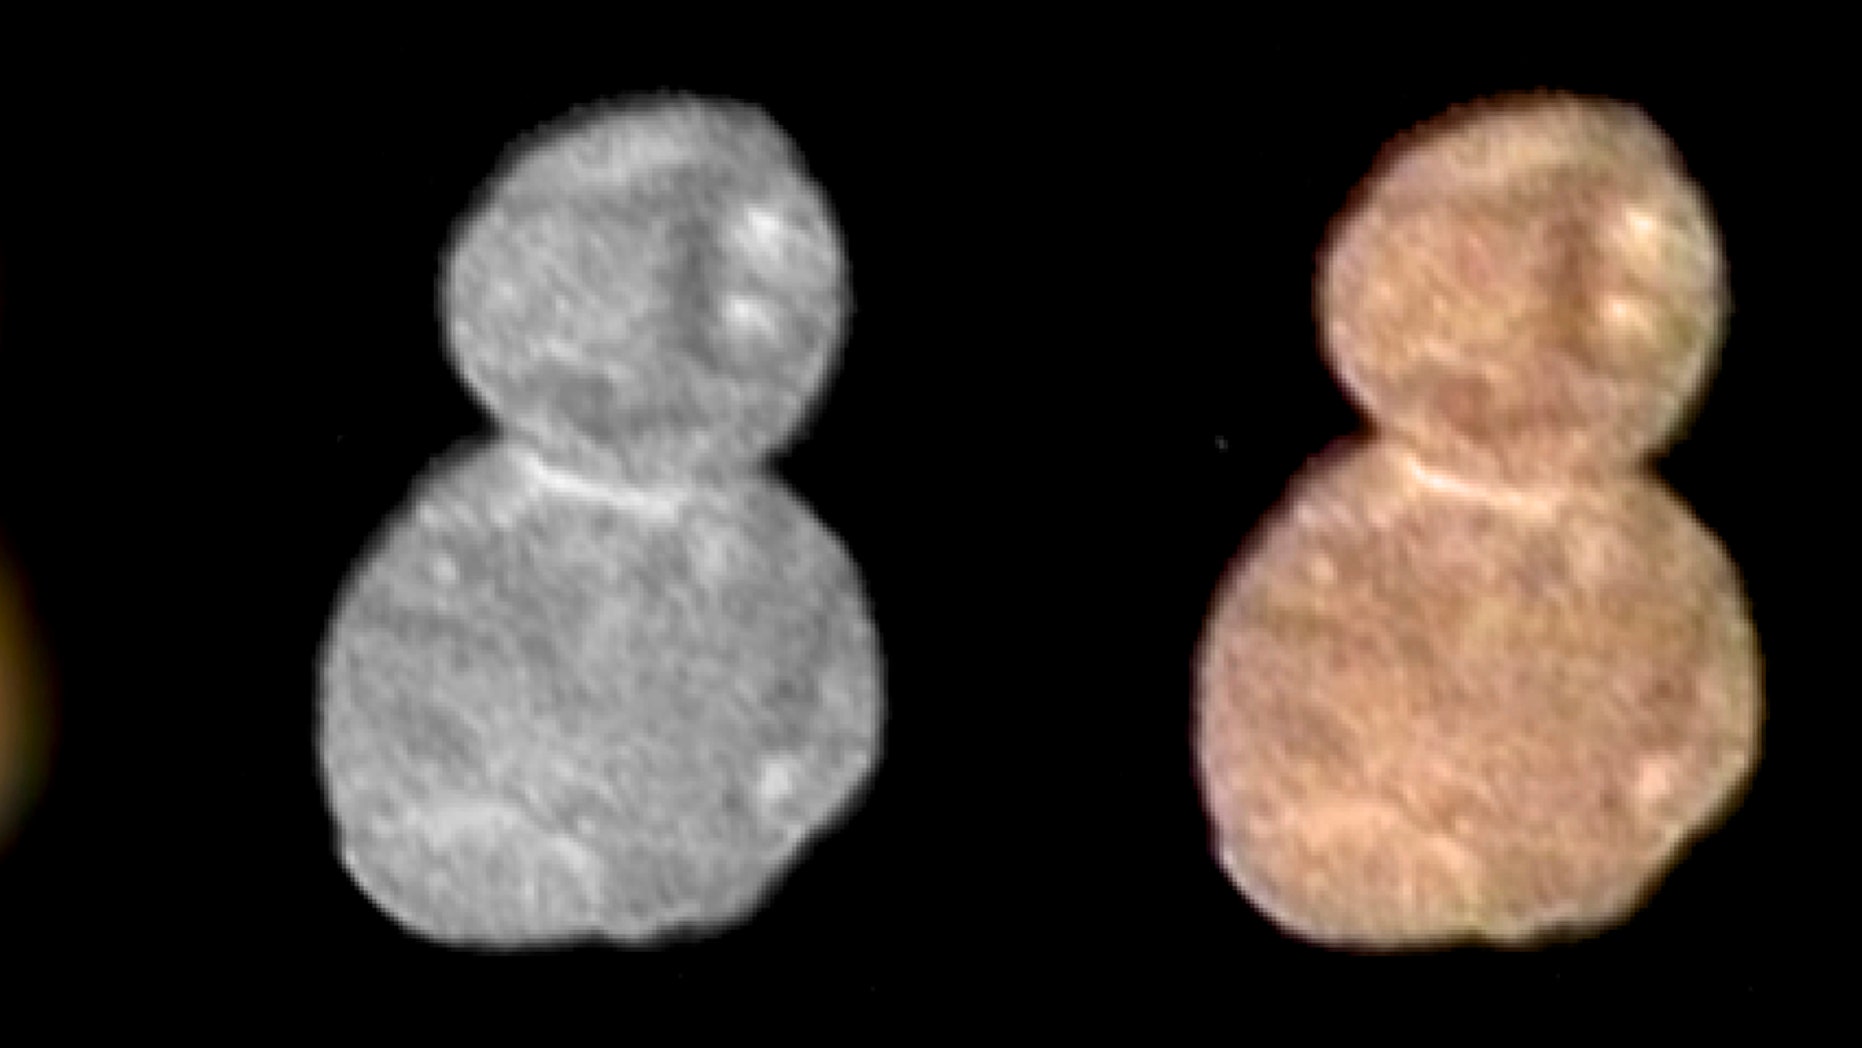 NASA says icy object past Pluto looks like reddish snowman